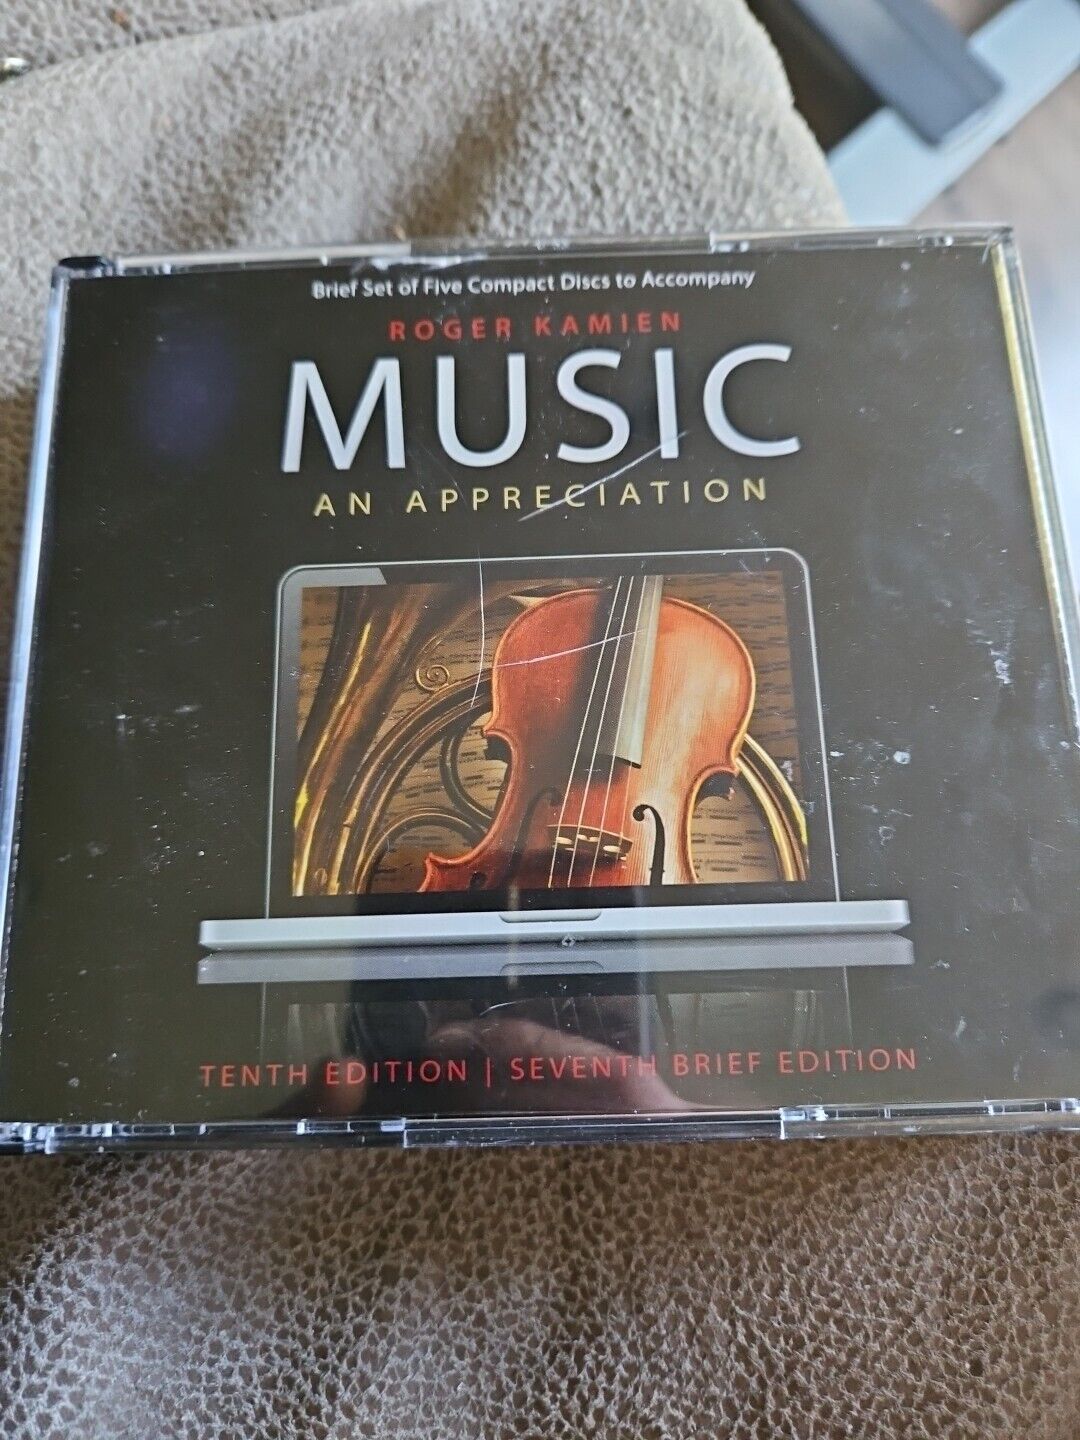 Music: An Appreciation (10th Edition, 7th Brief Edition) [5 CD] (CD, 2011, 5...